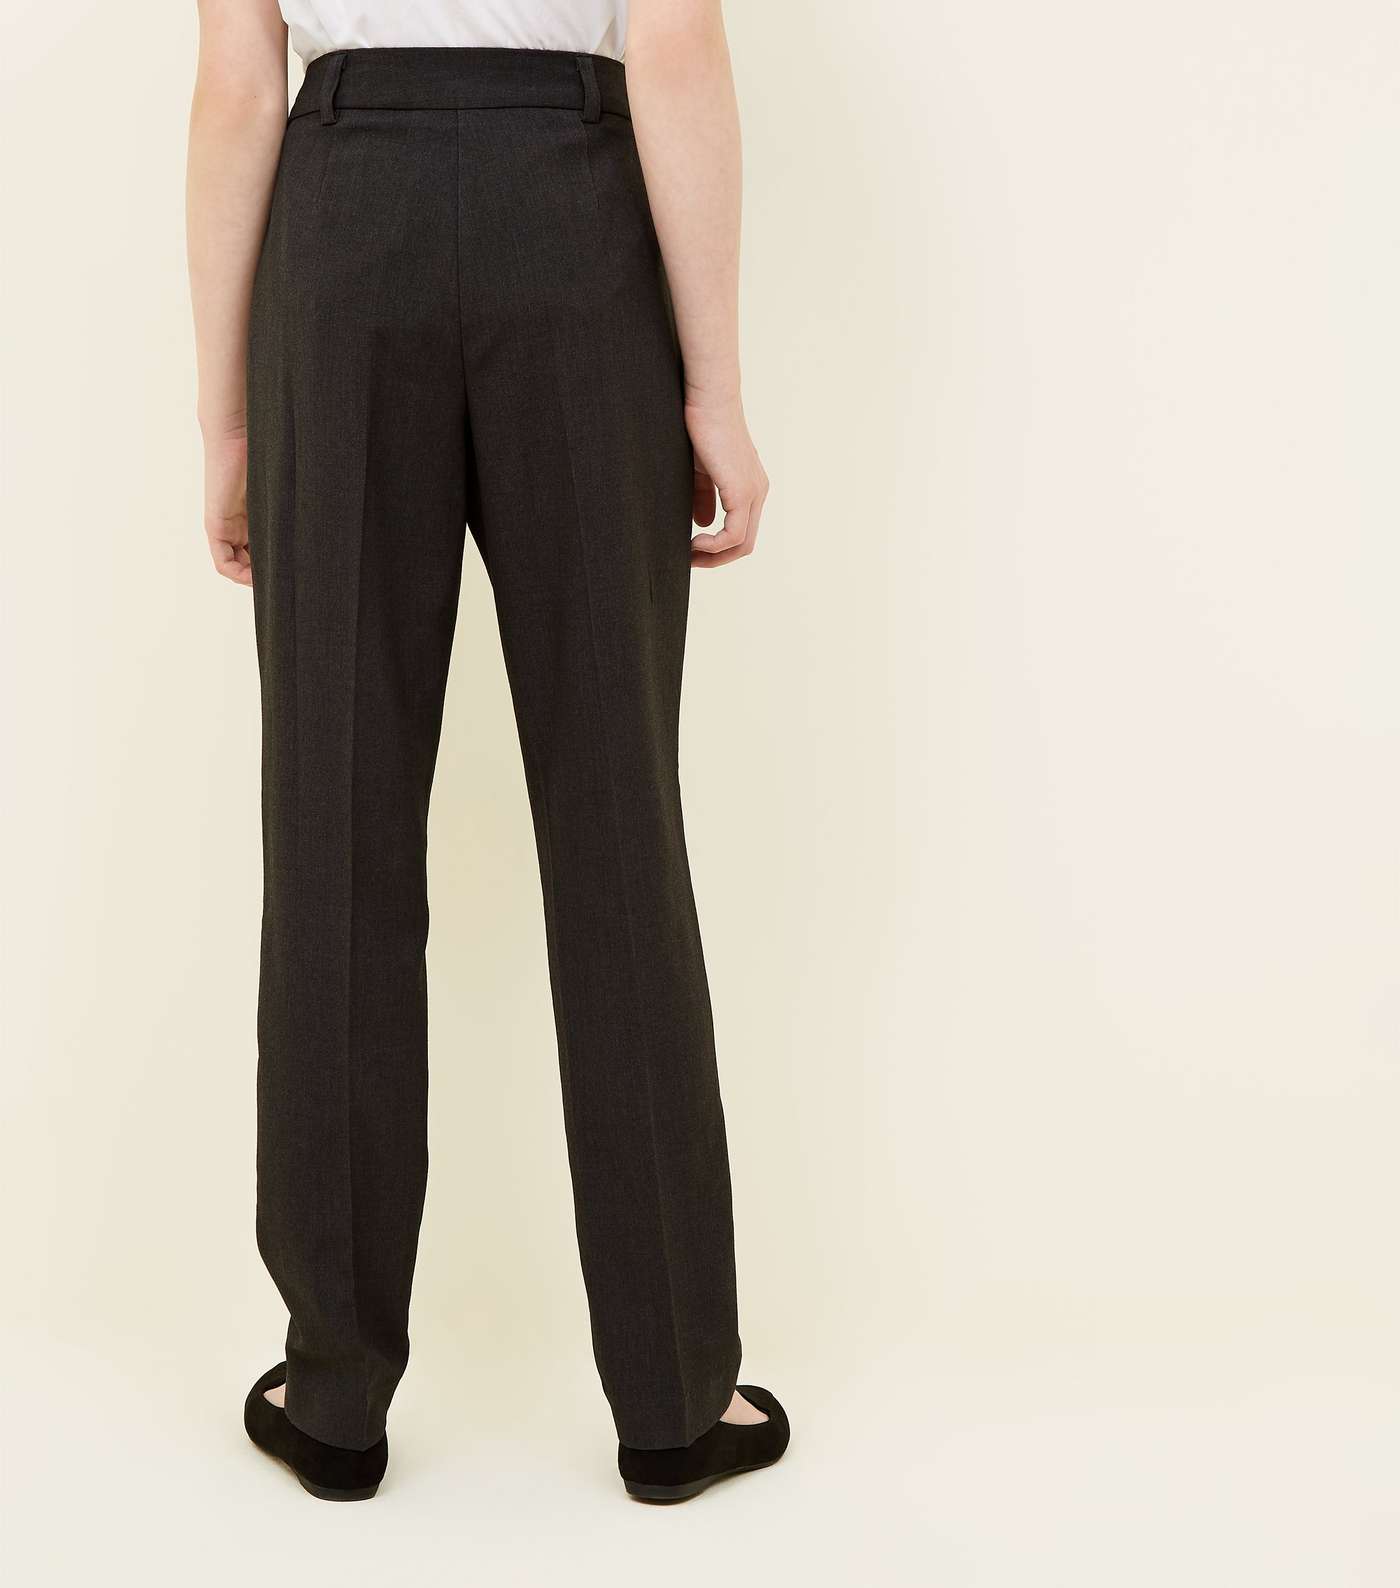 Girls Grey Leather-Look Trim School Trousers Image 3